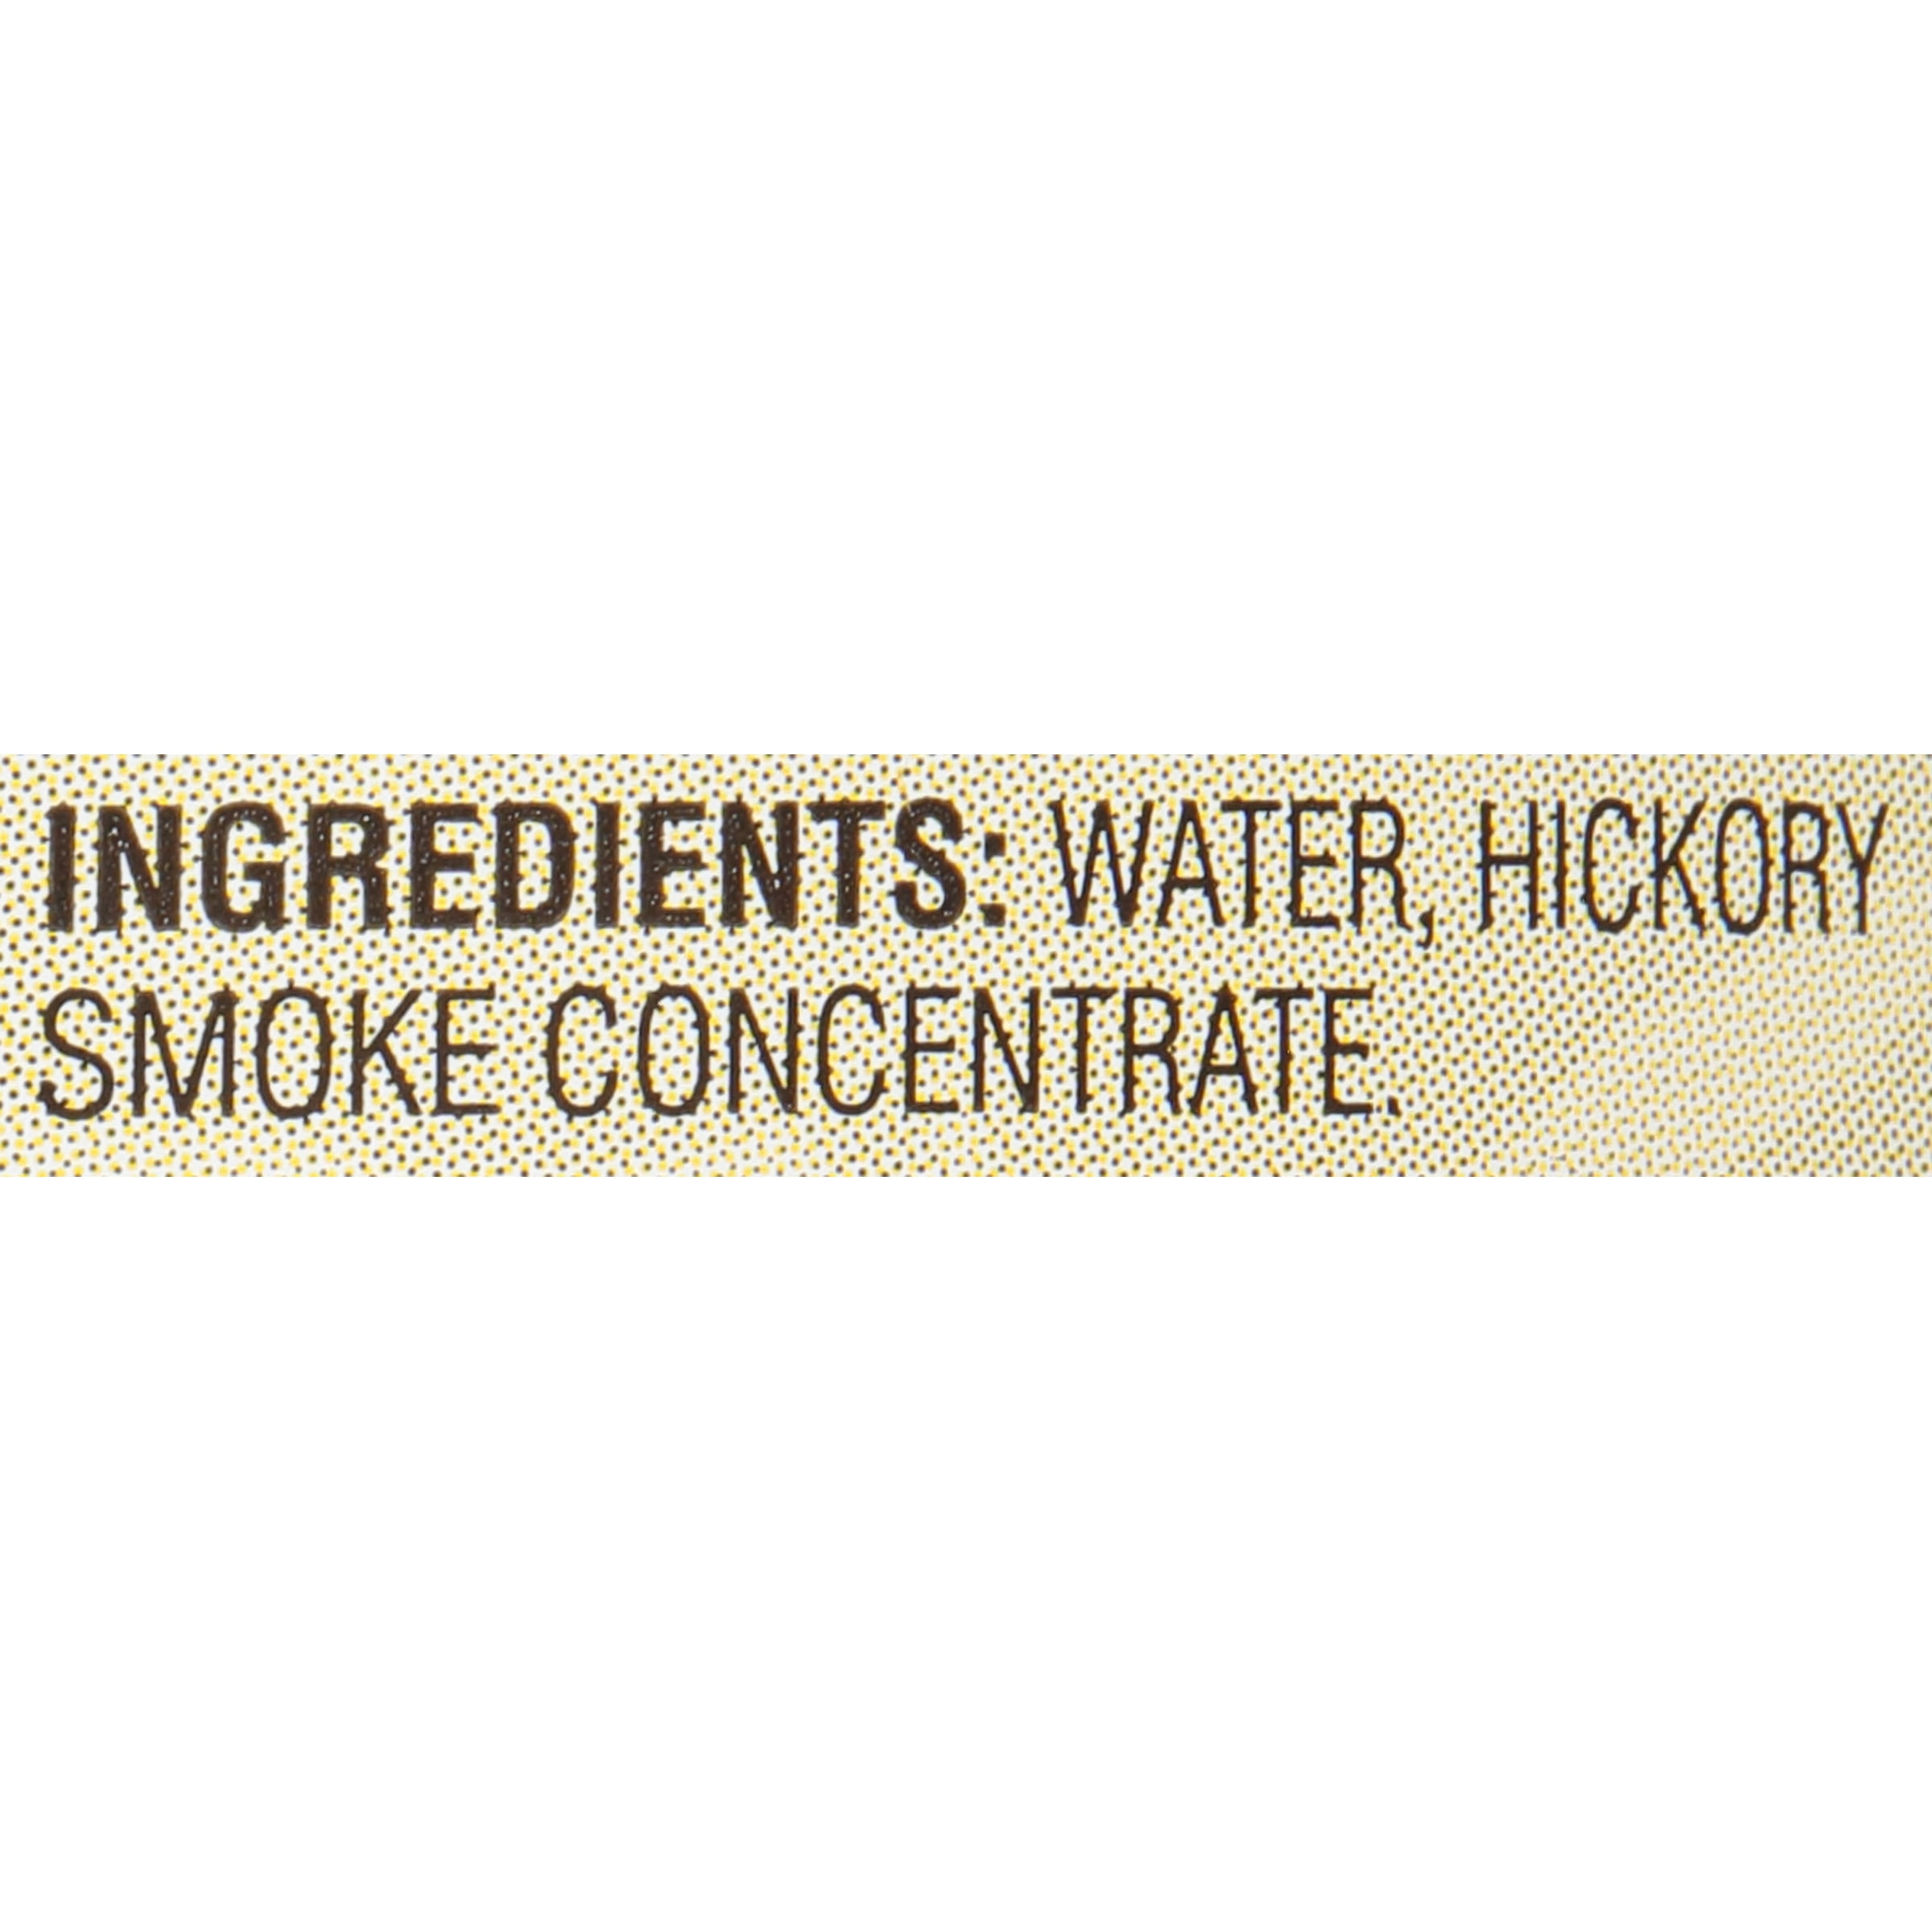 Hickory Liquid Smoke – PS Seasoning